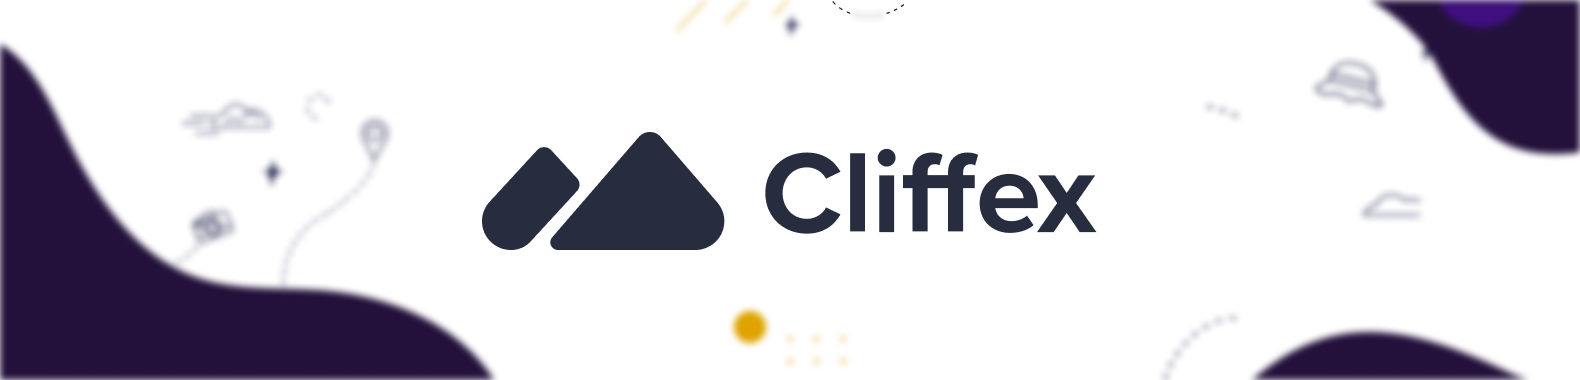 cliffex